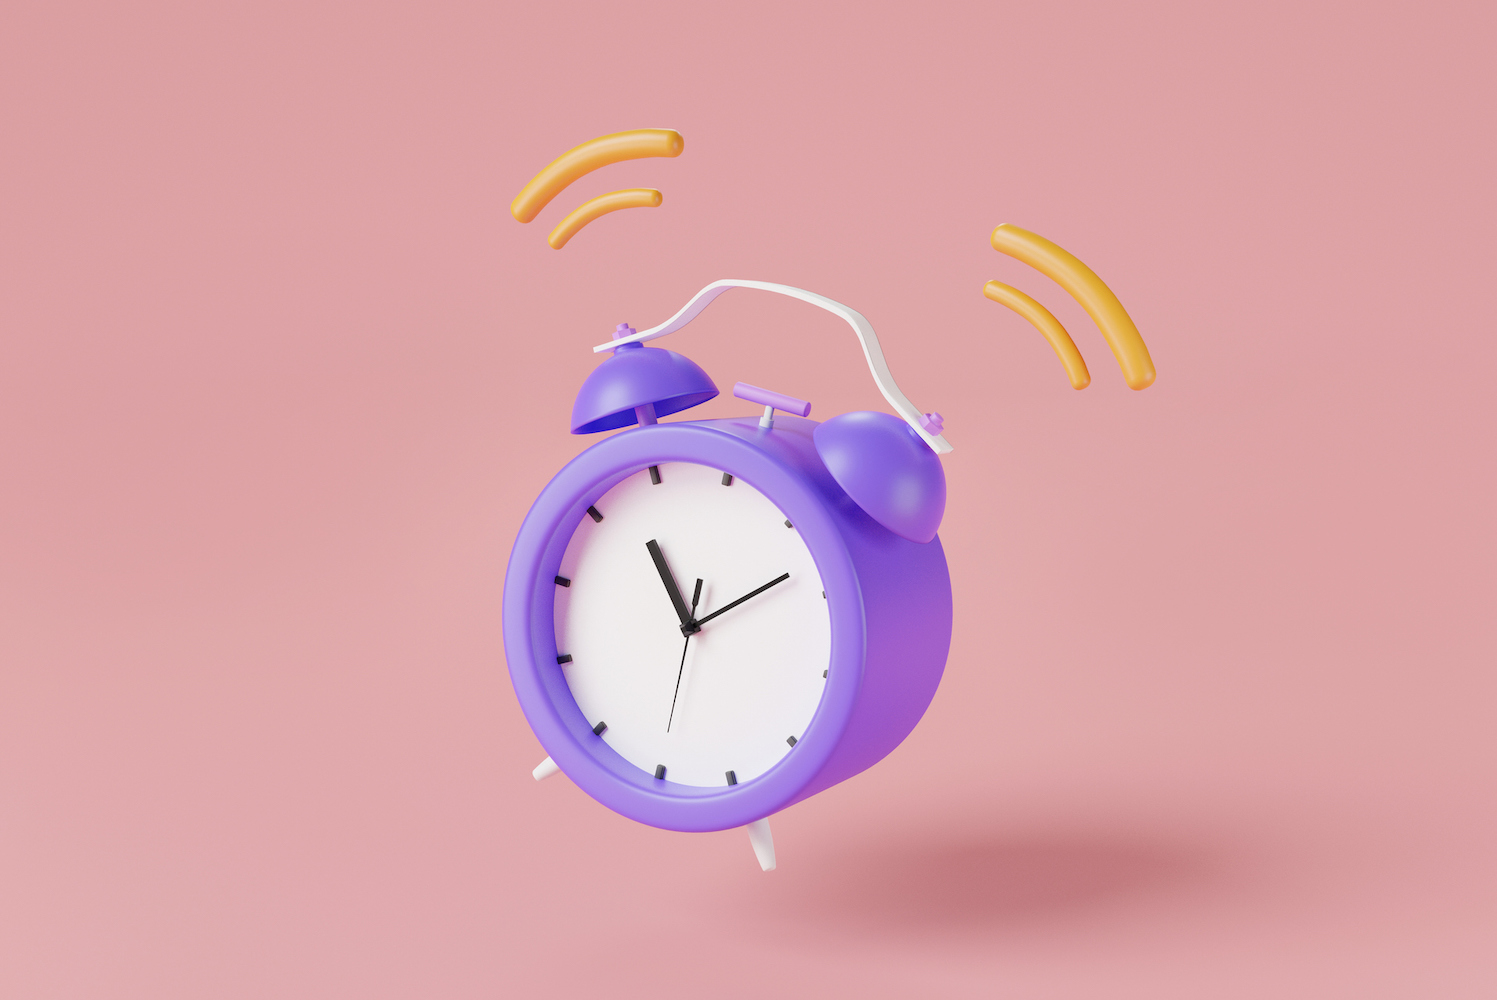 Purple alarm clock ringtone on pink background.  For thorough due diligence, minimize disruption to maximize success.